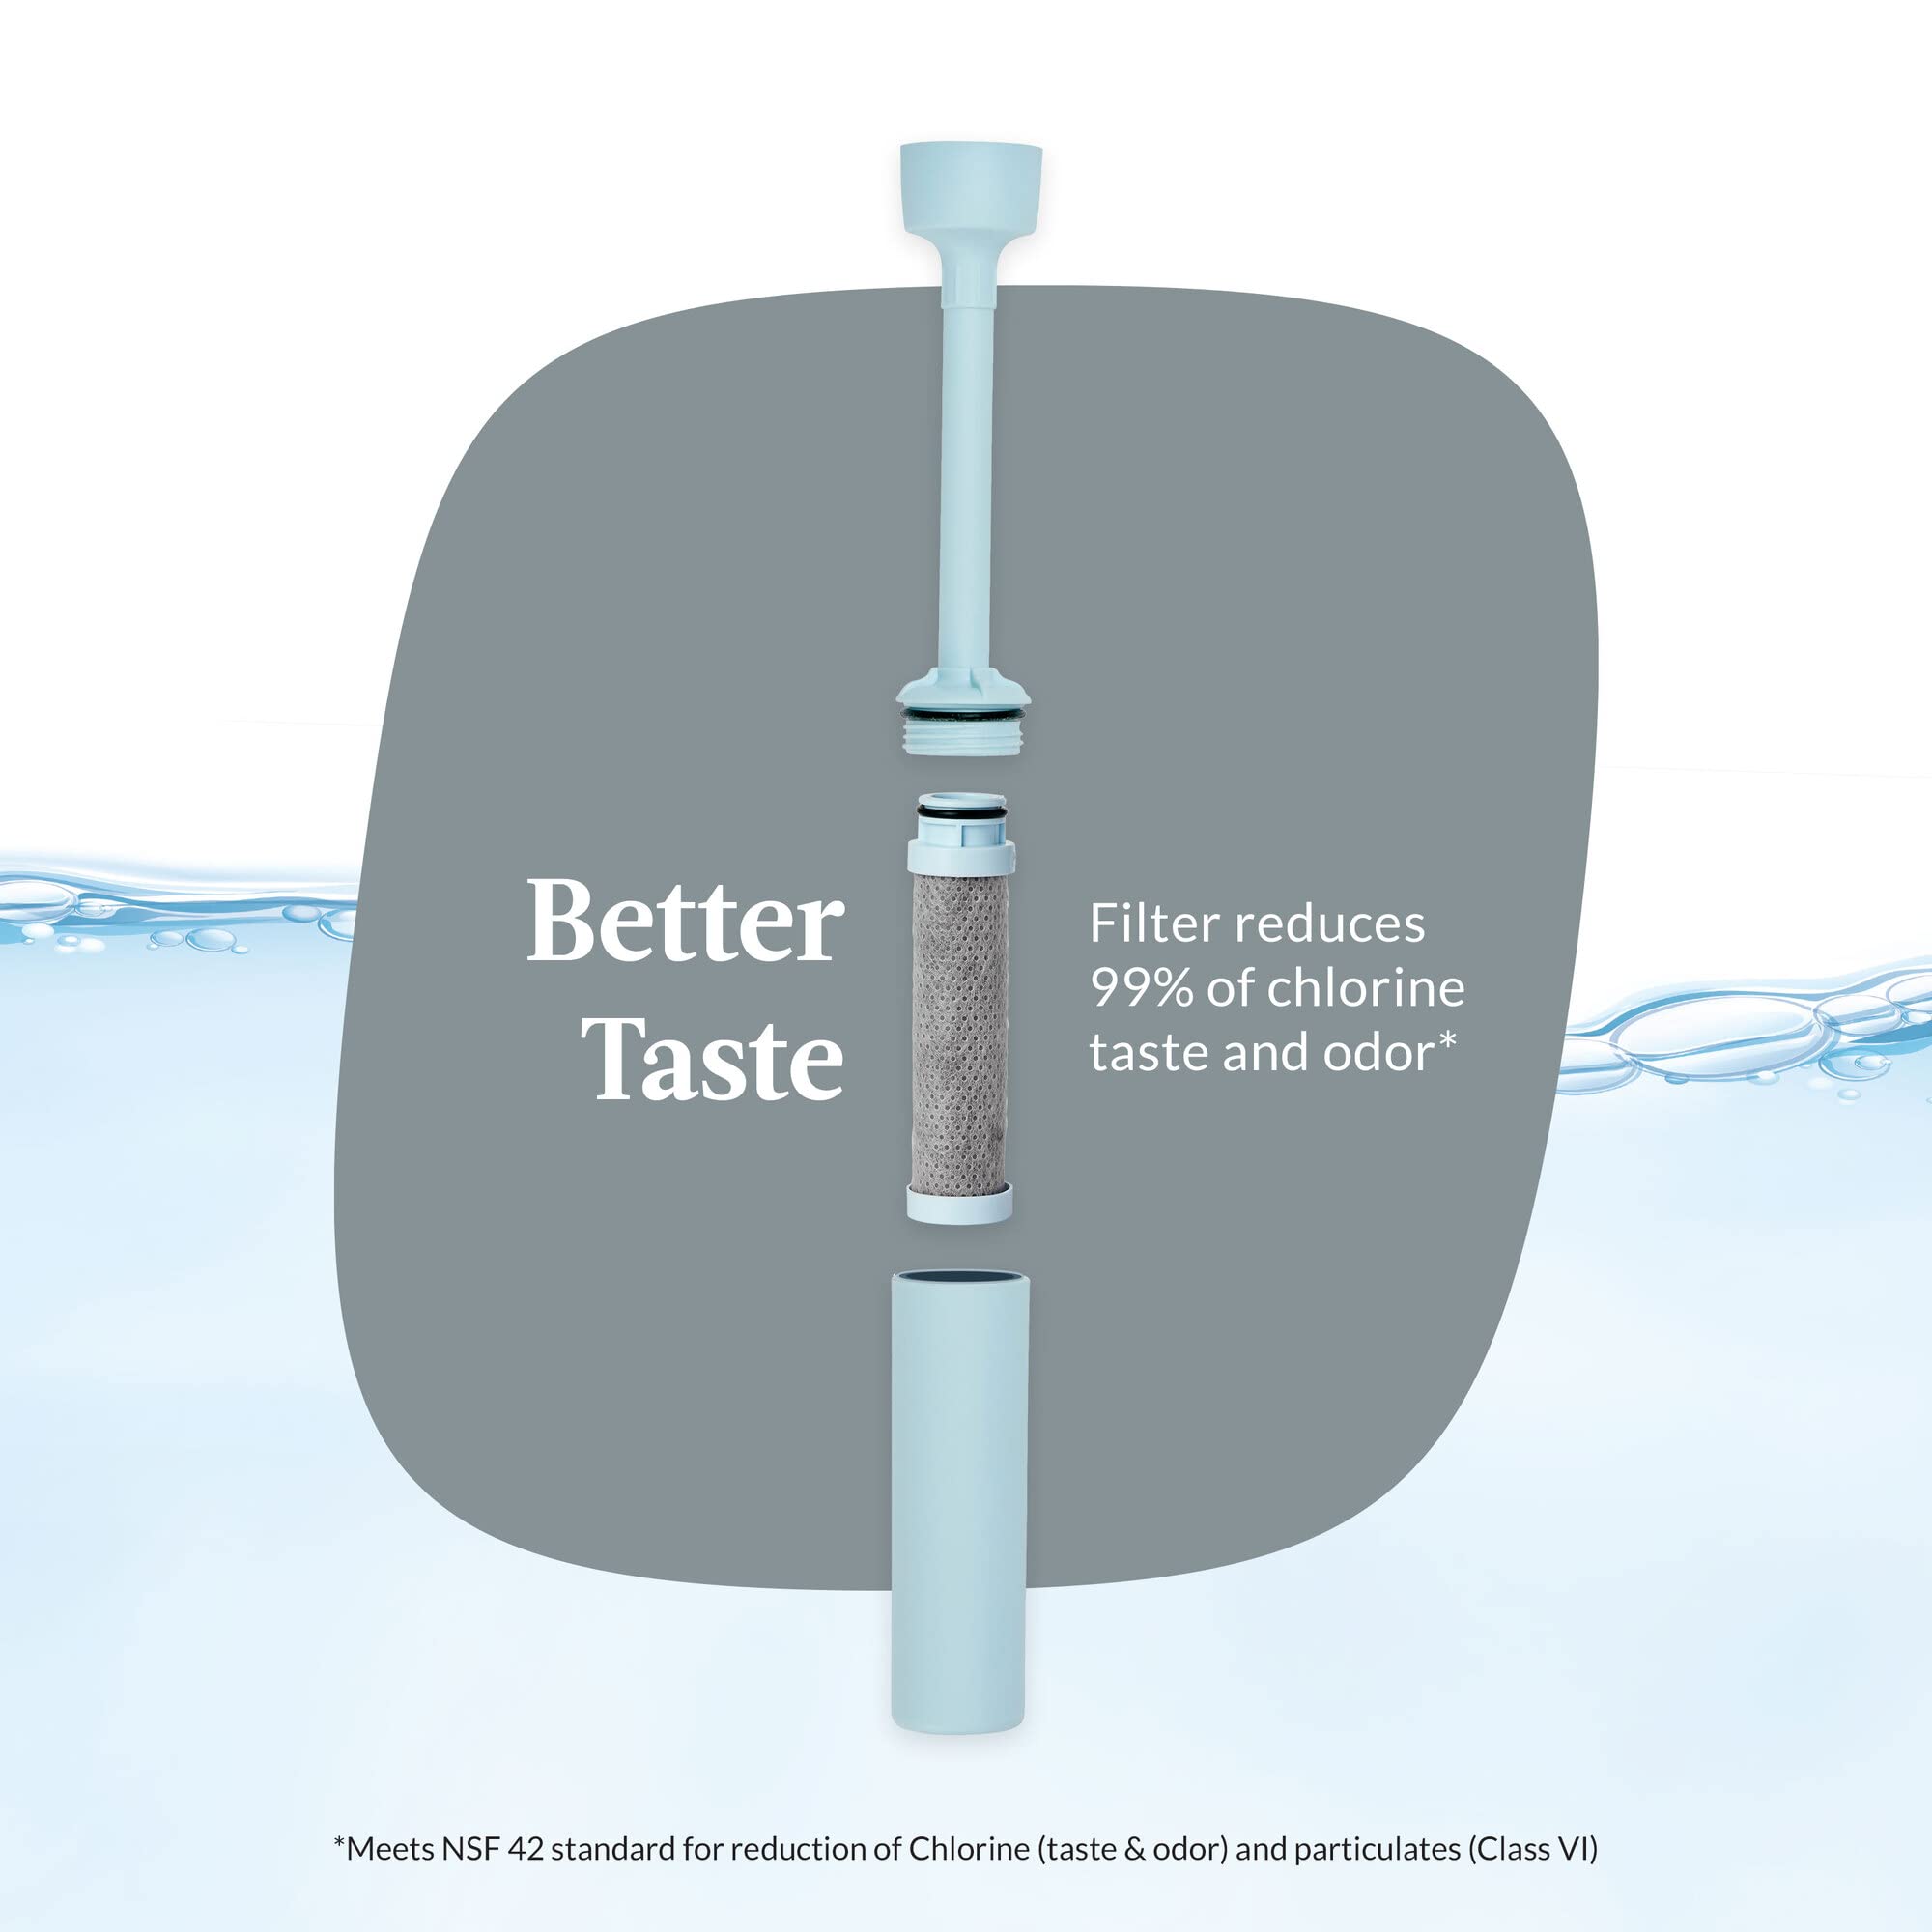 Contigo Wells Replacement Filter for Wells Filtered Water Bottles